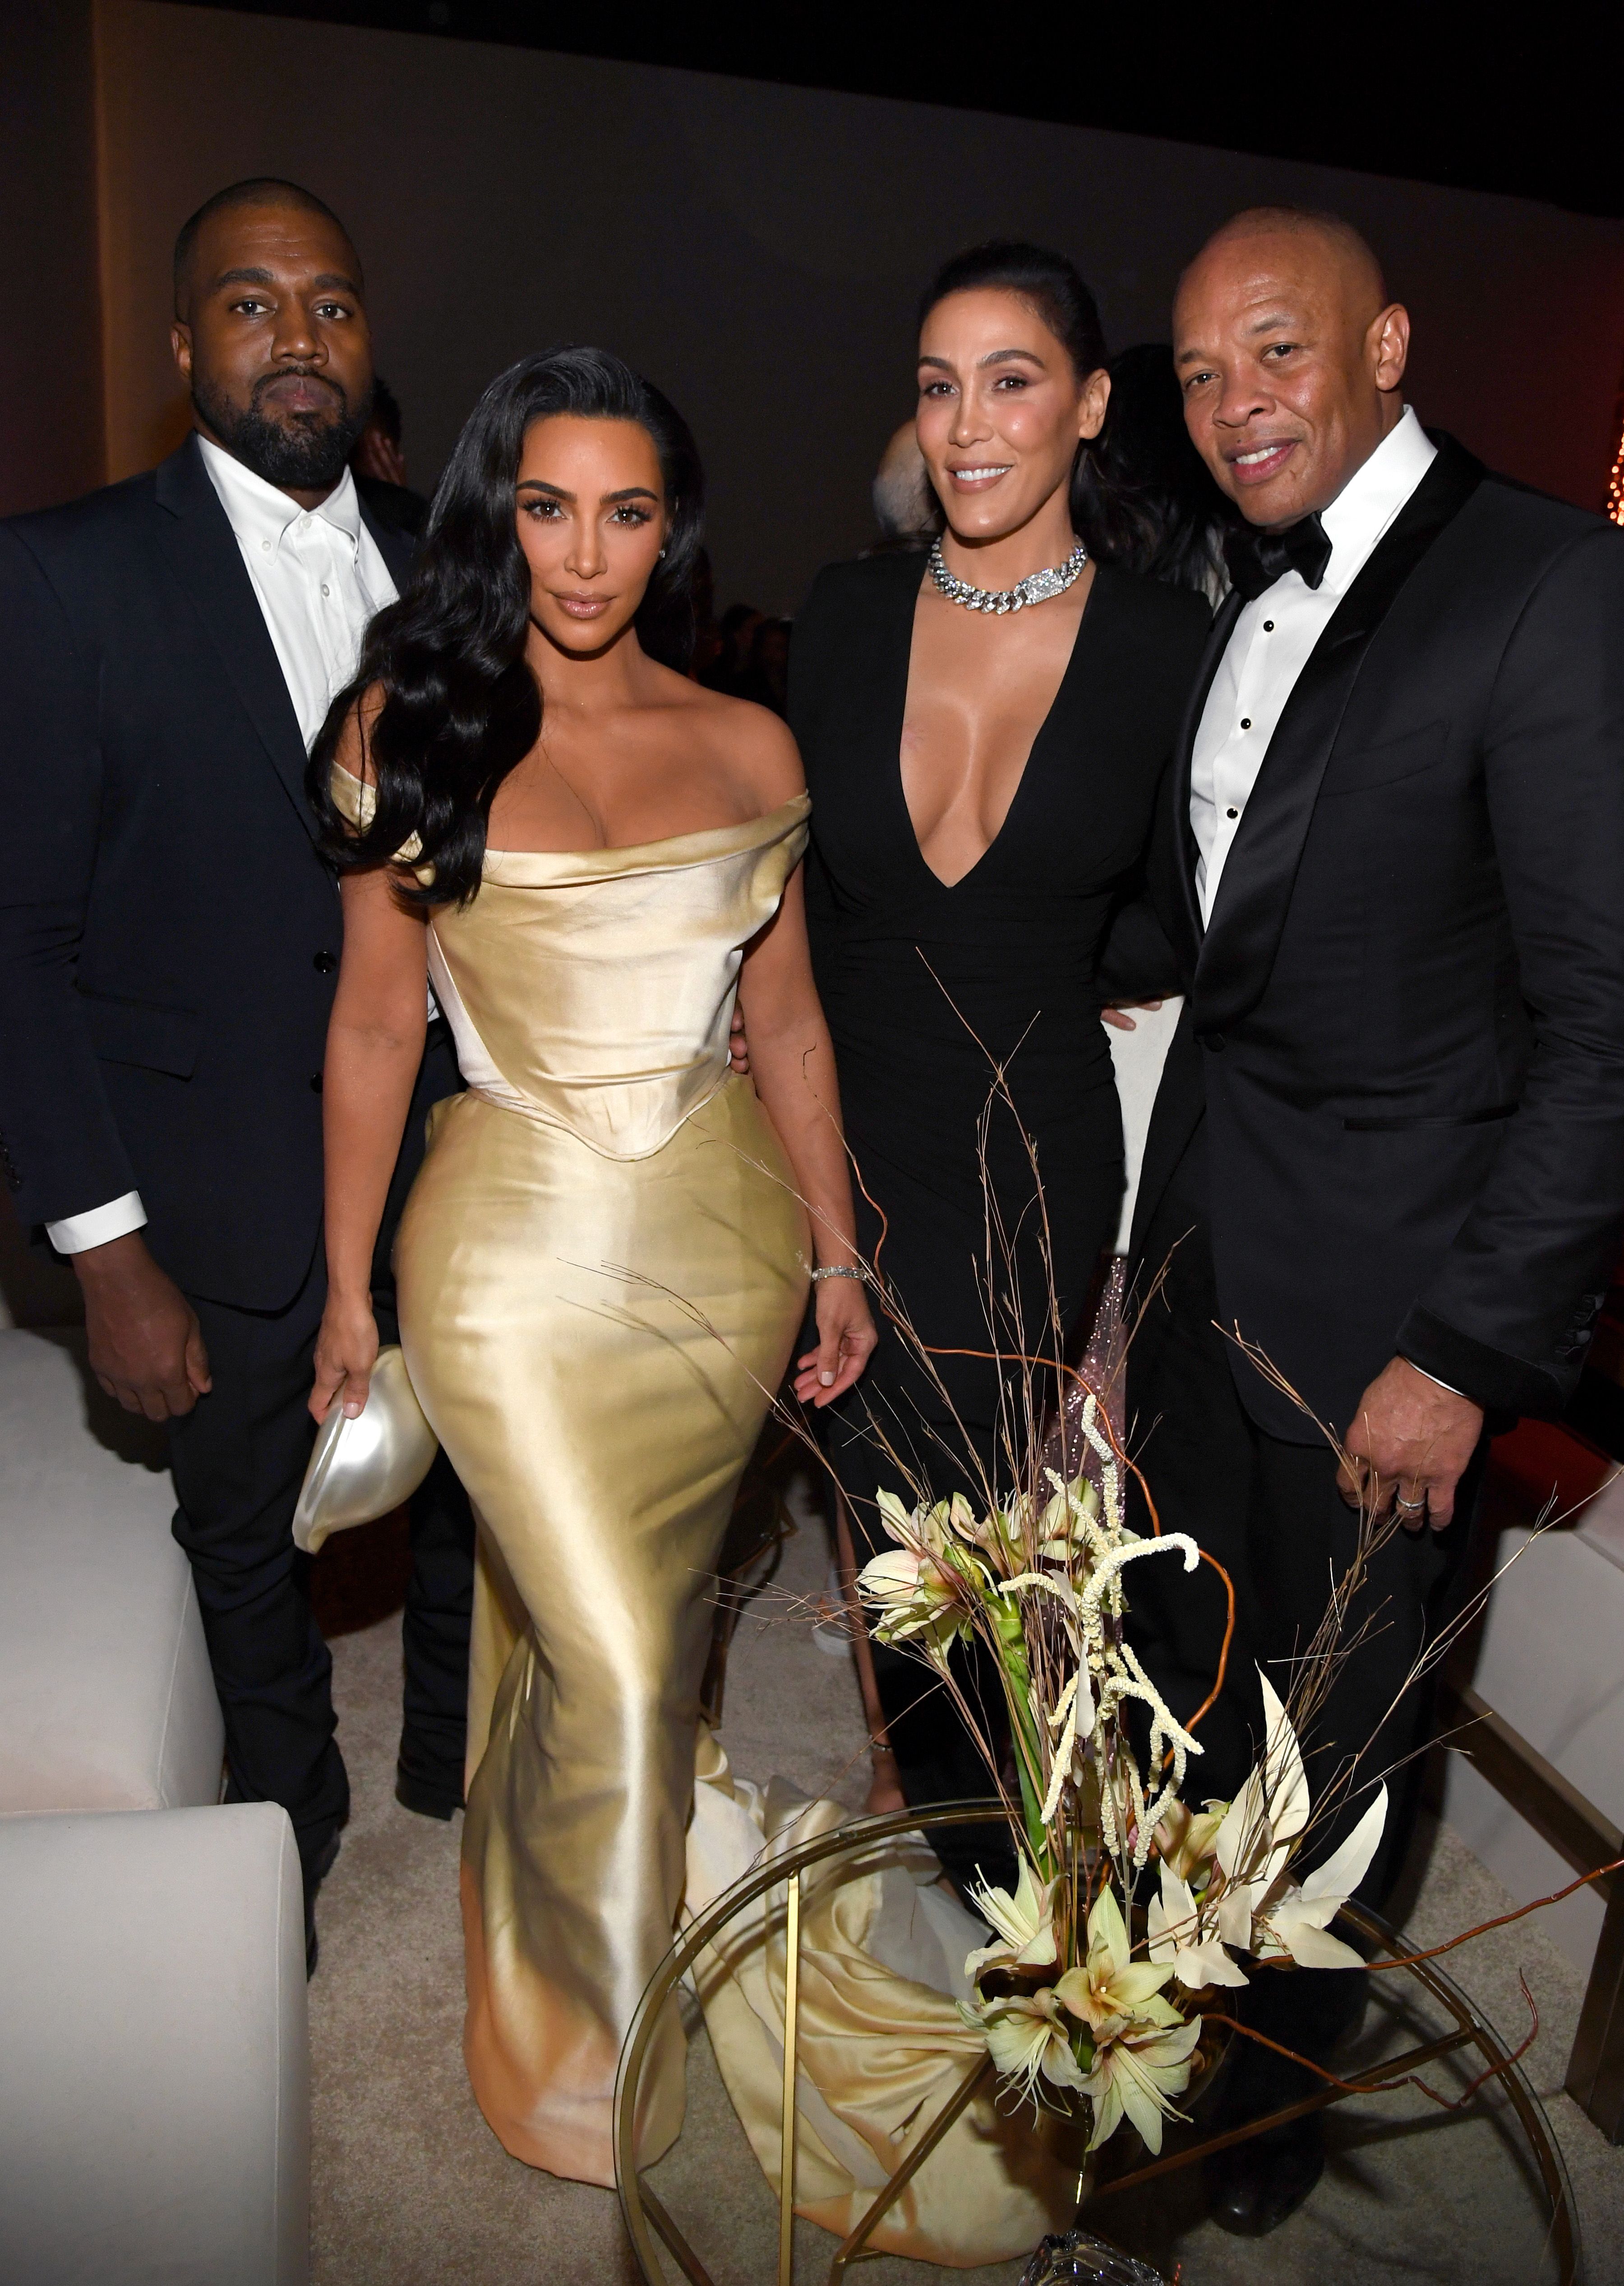 Kim Kardashian wears a wedding dress for Diddy's 50th birthday